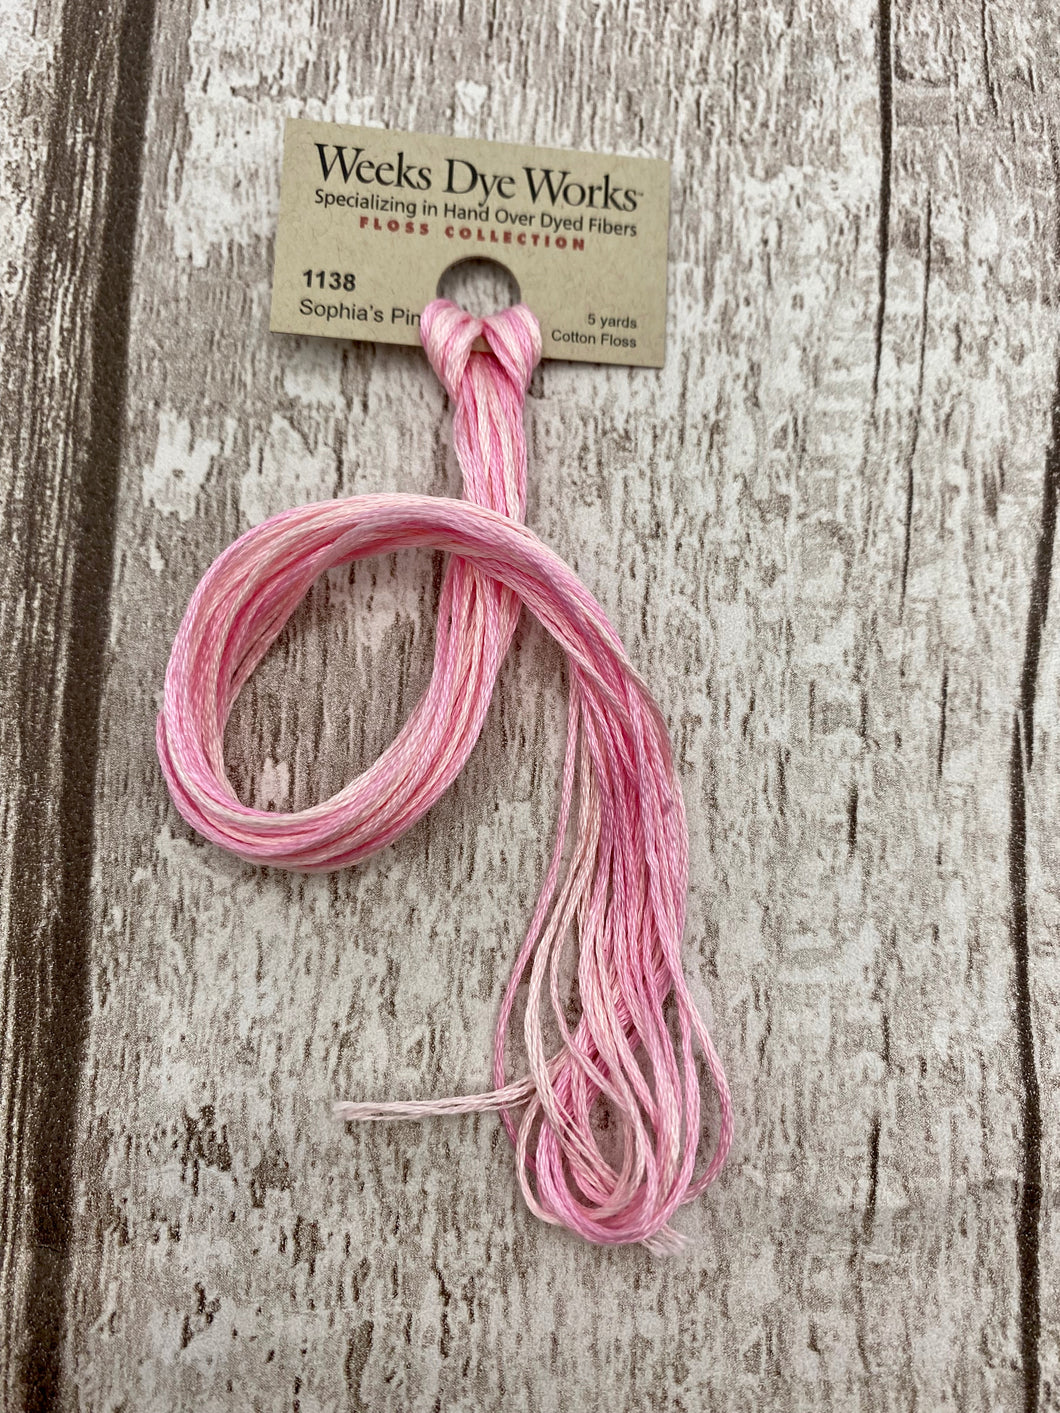 Sophia's Pink (#1138) Weeks Dye Works 6-strand cotton floss